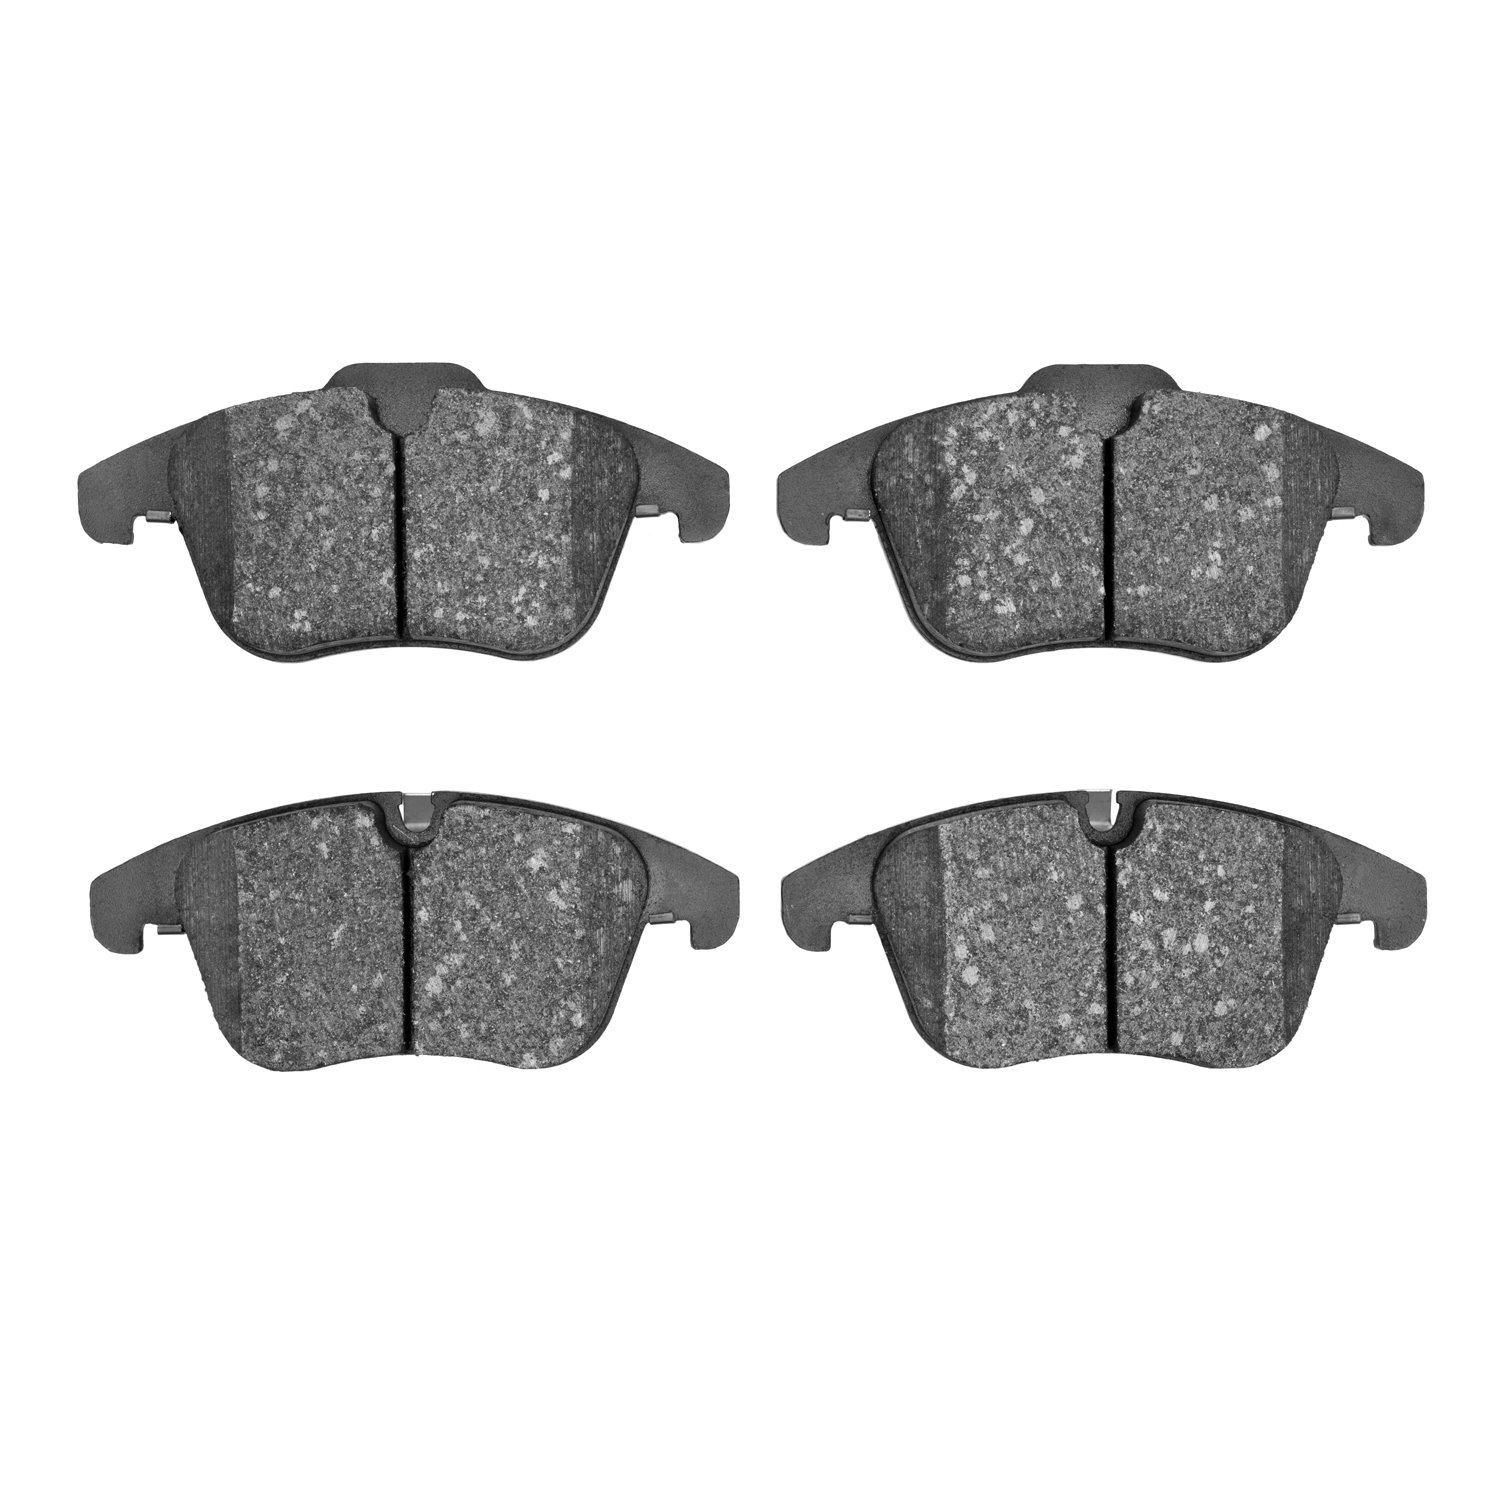 Euro Ceramic Brake Pads, 2006-2018 Fits Multiple Makes/Models, Position: Front